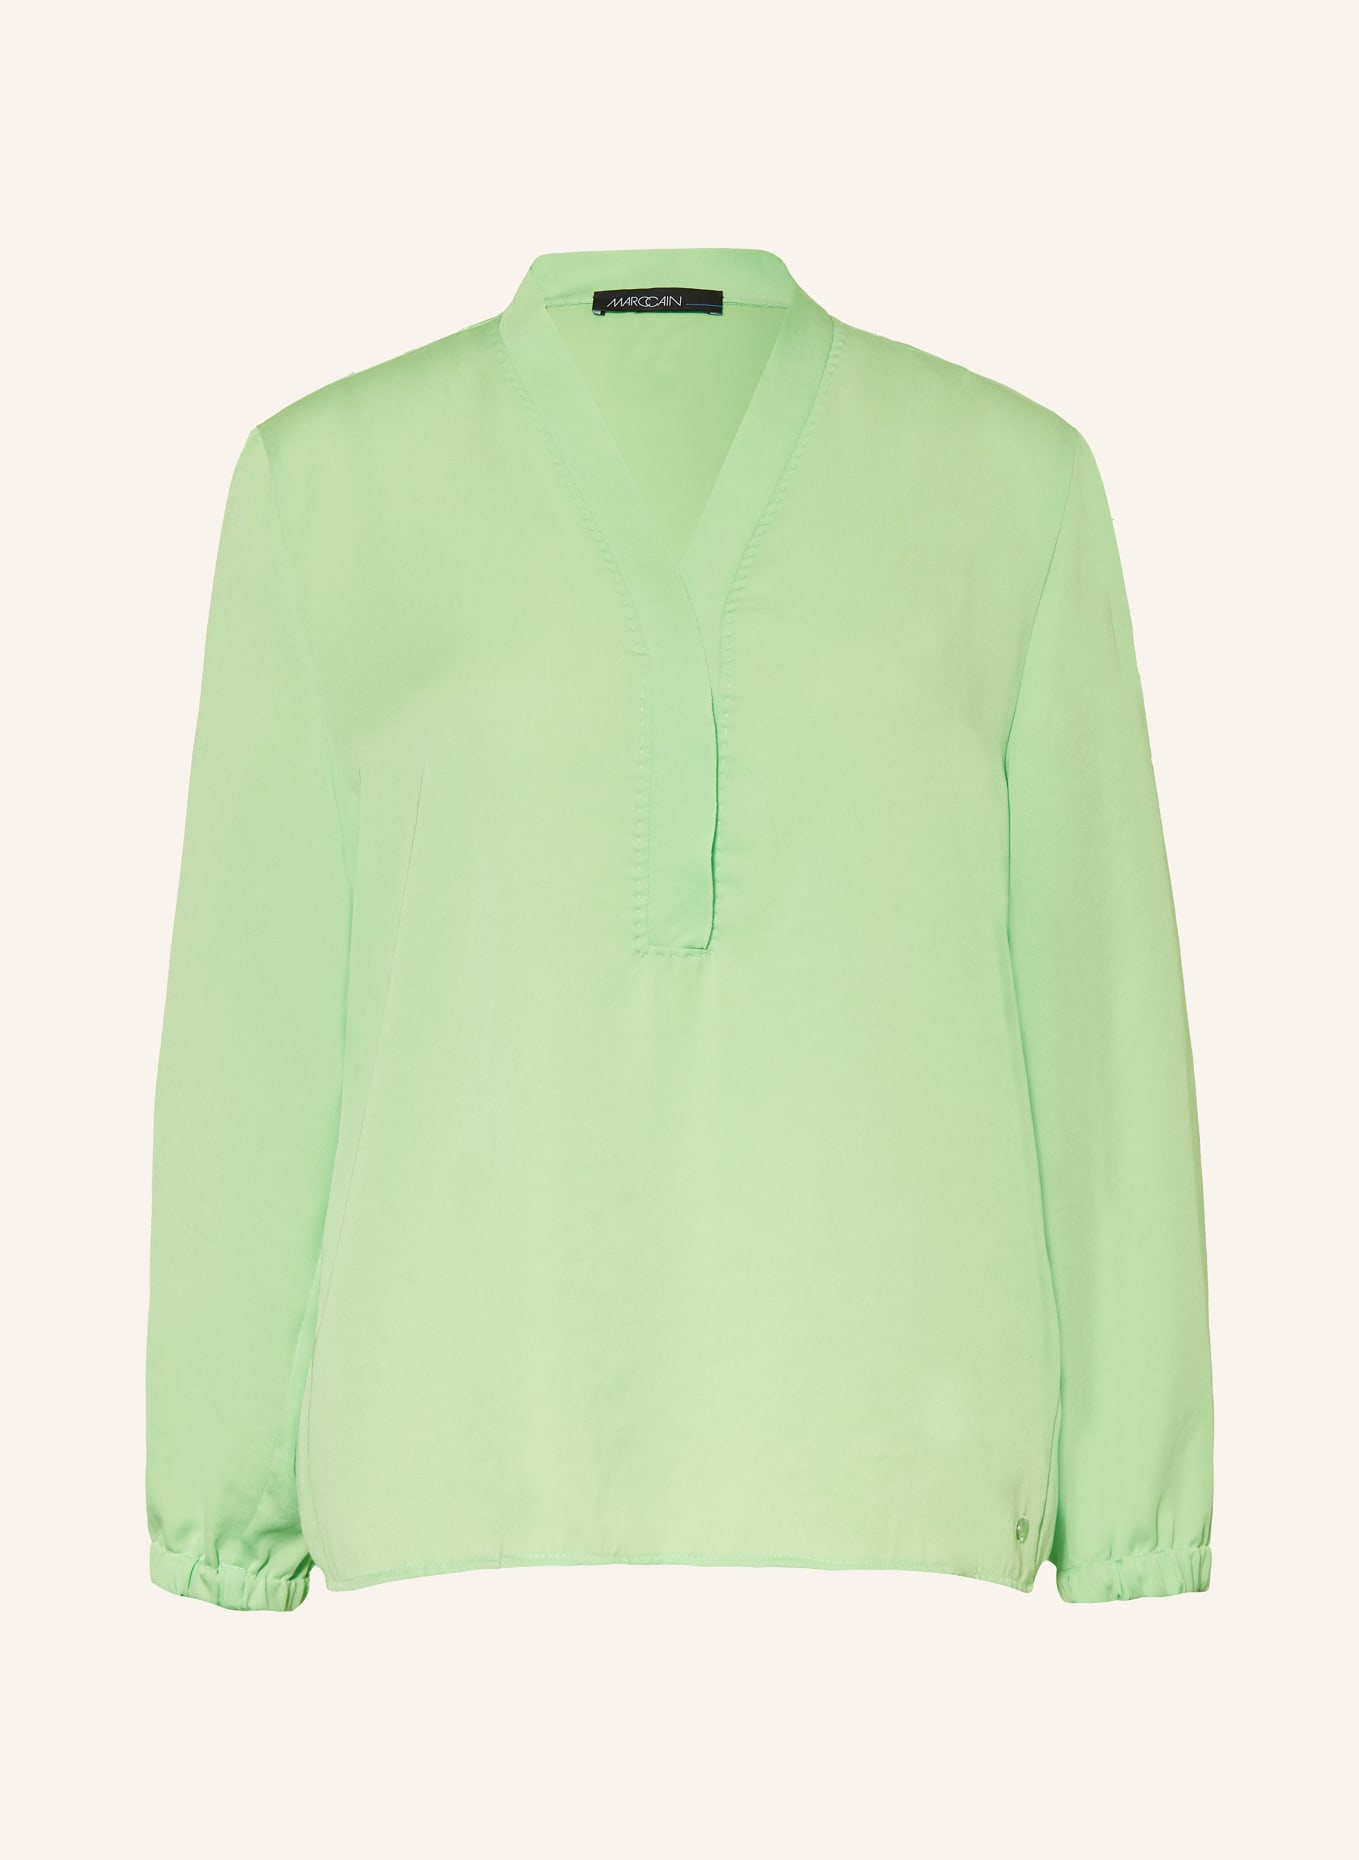 MARC CAIN Bluse, Farbe: 531 light apple green (Bild 1)